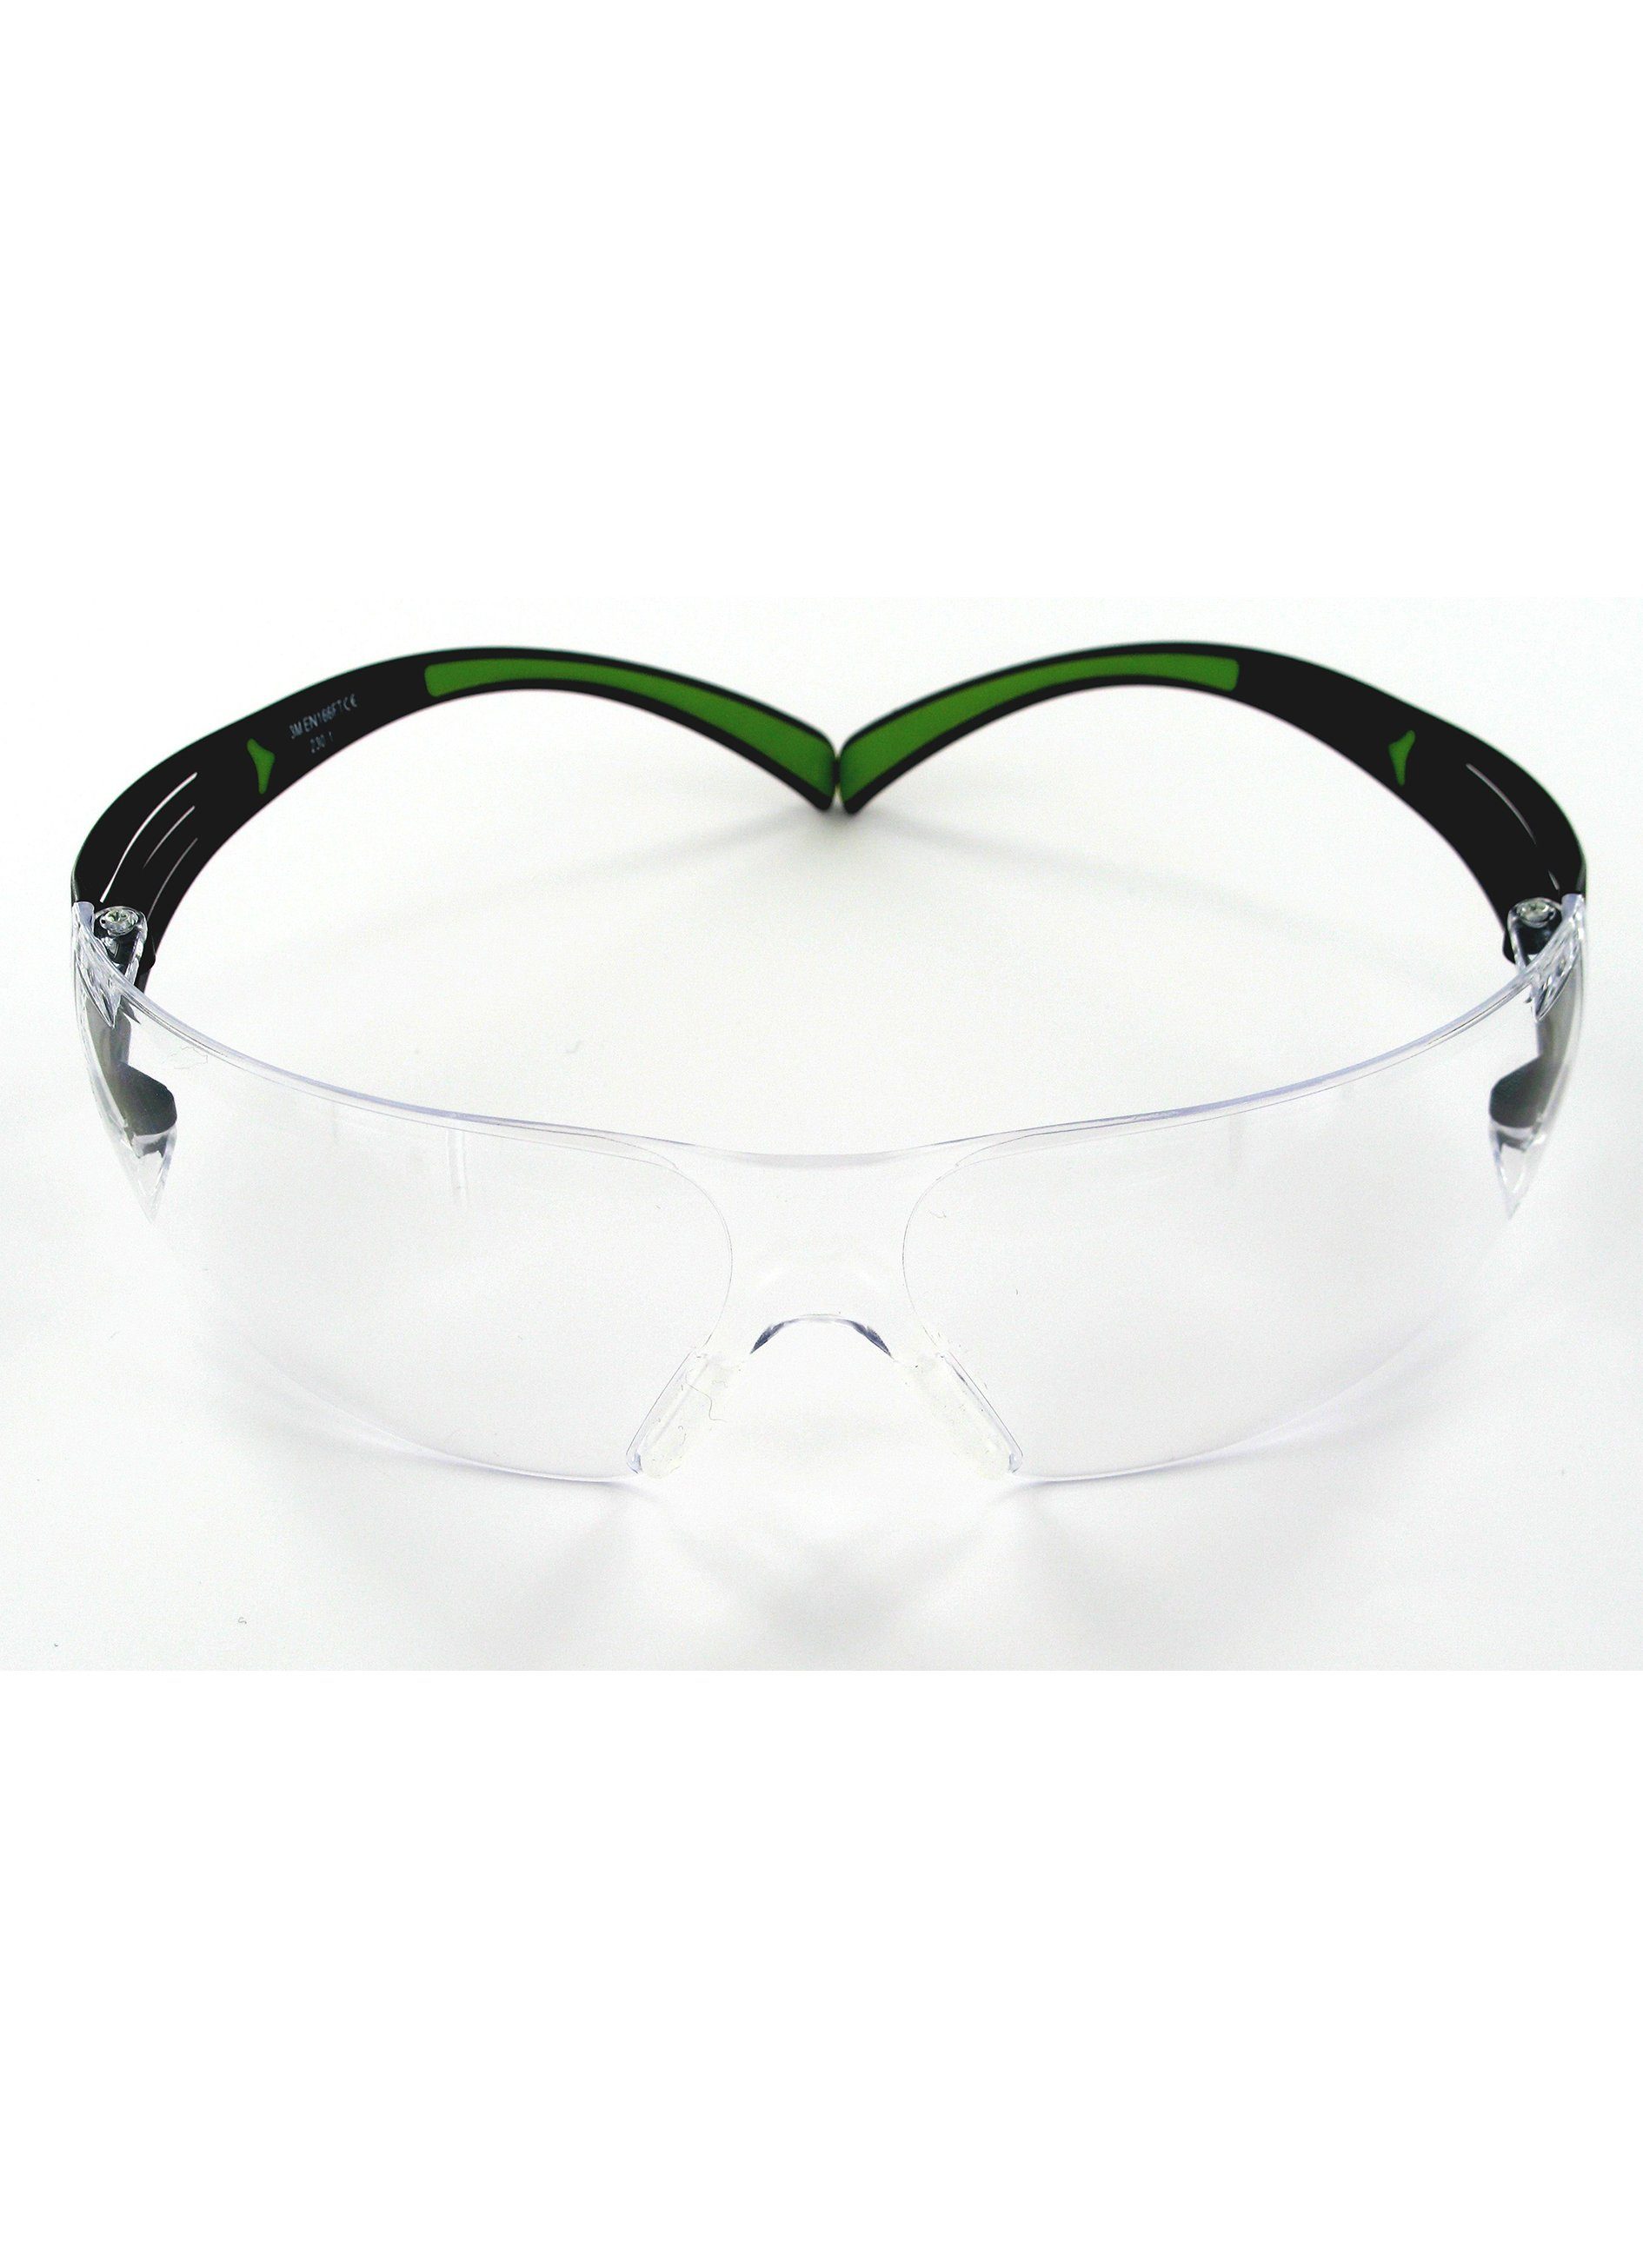 3M Brille 3M SecureFit Schutzbrille SF401AF, klar, Anti-Fog- & Anti-Scratch-Beschichtung